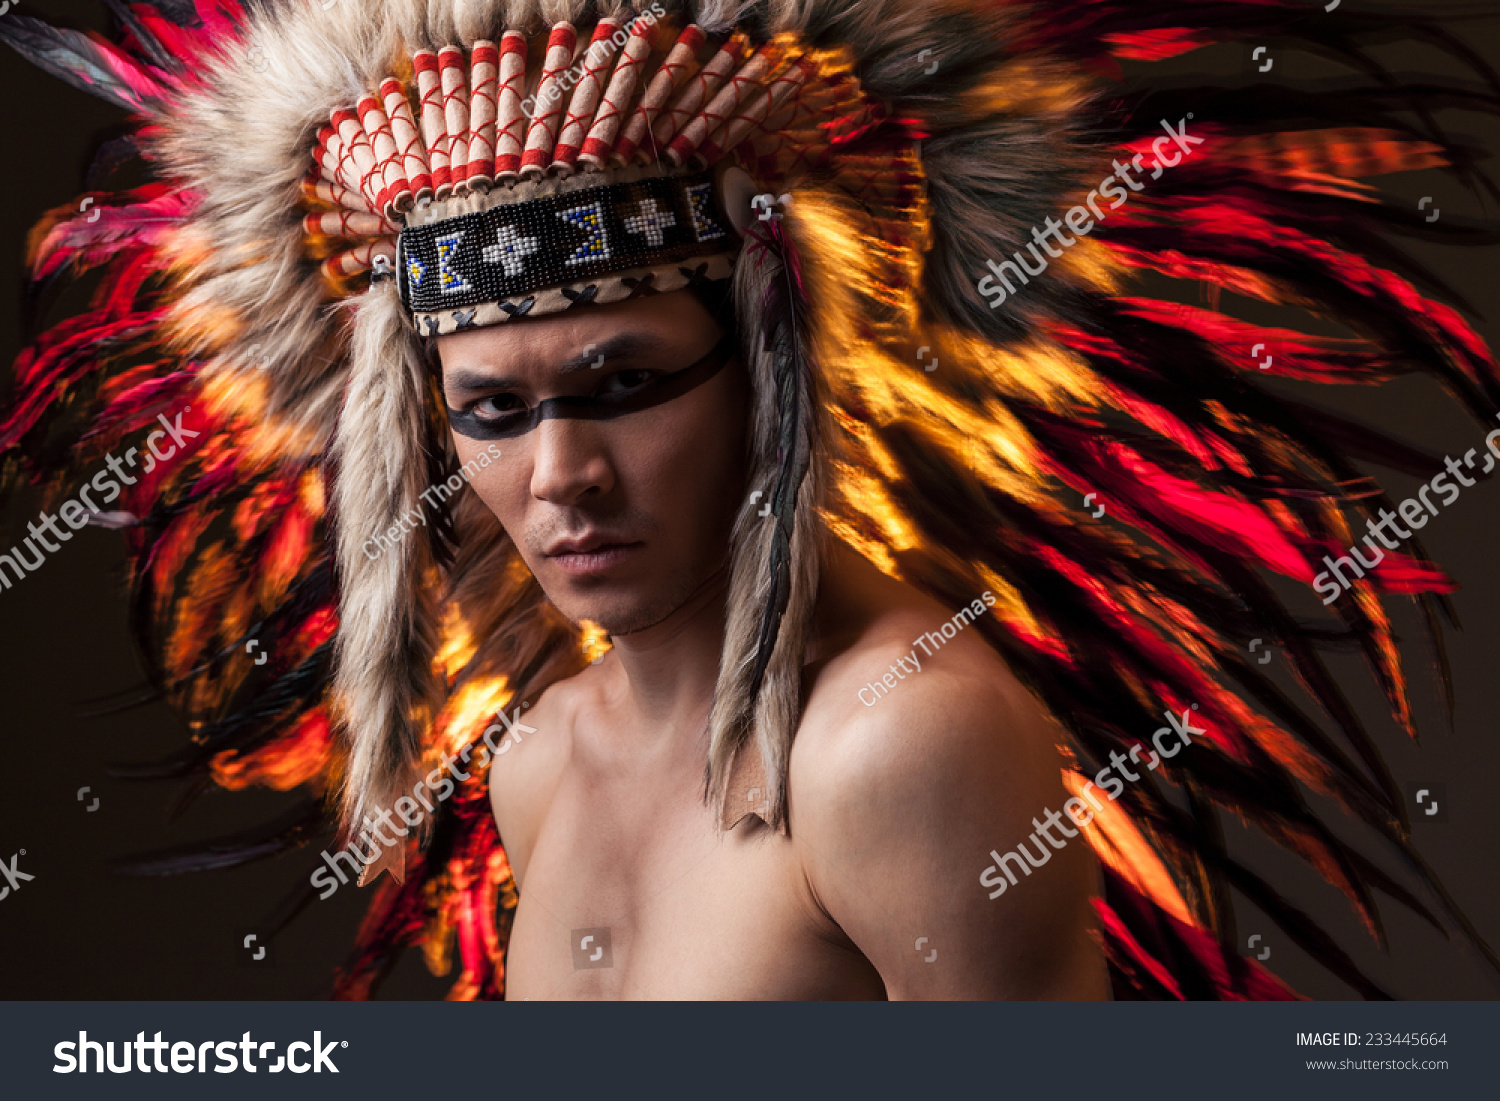 carissa forbes share naked native american man photos